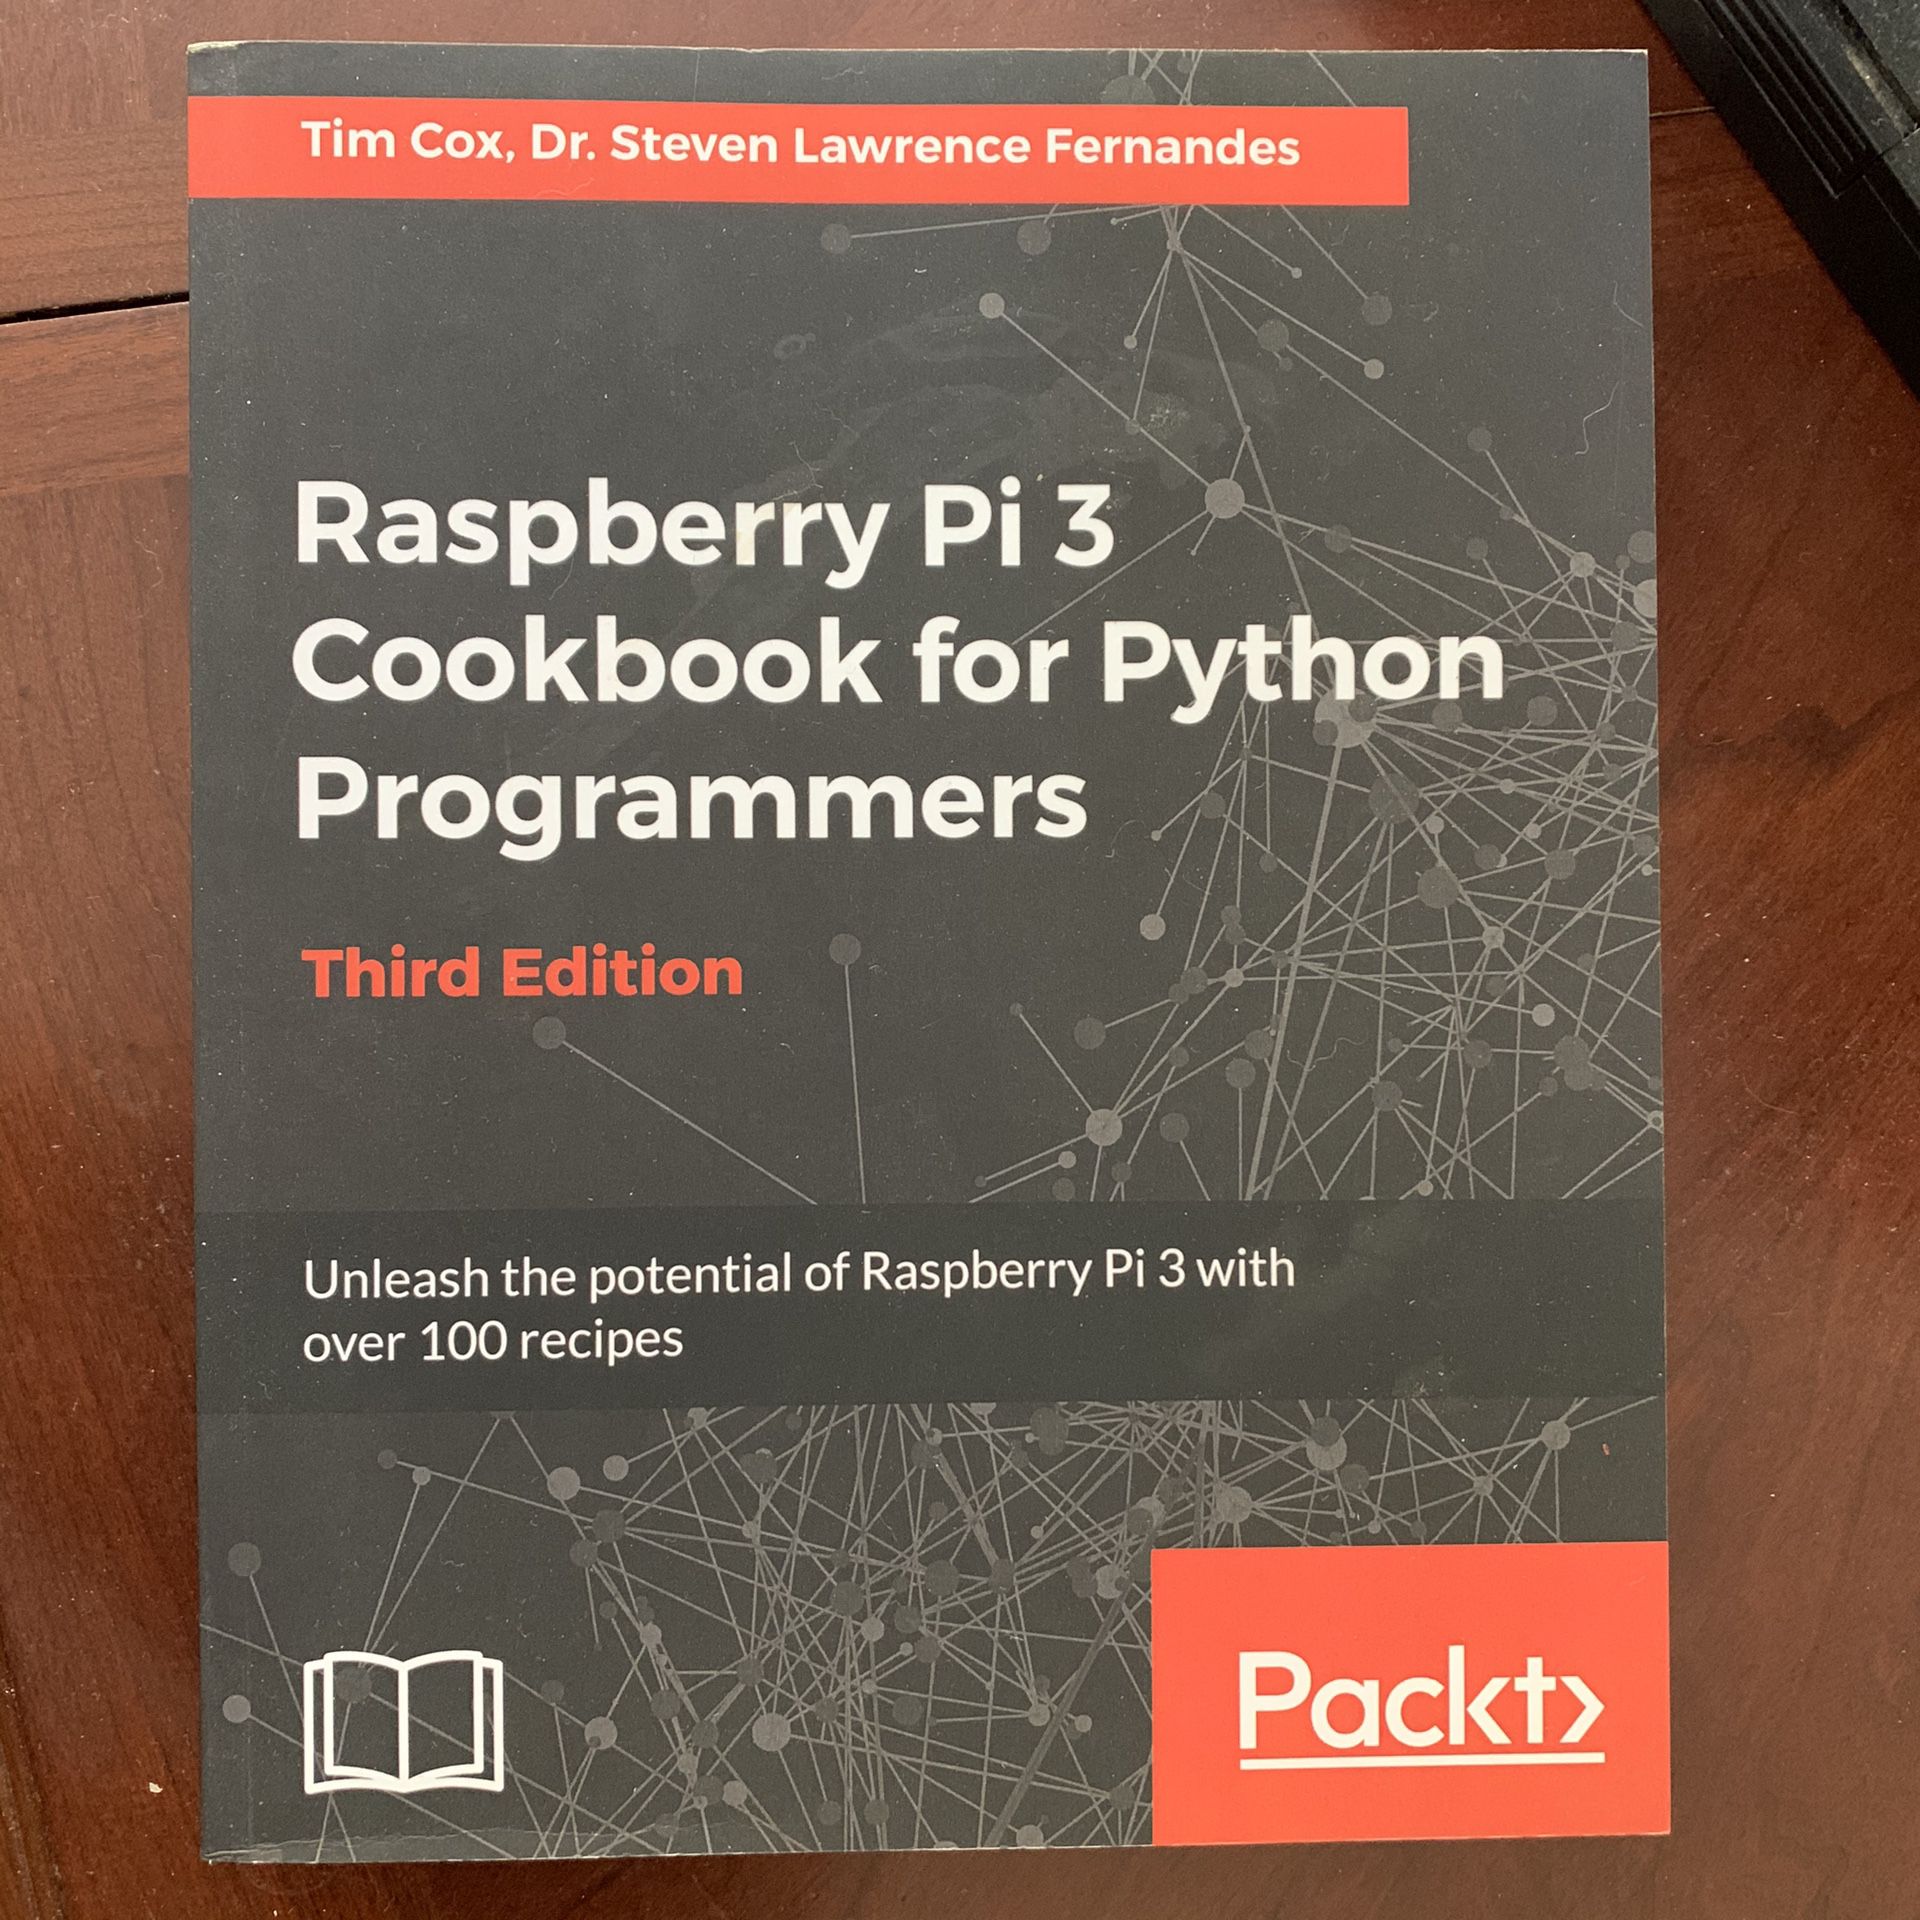 Raspberry Pi cookbook for Python Programmers